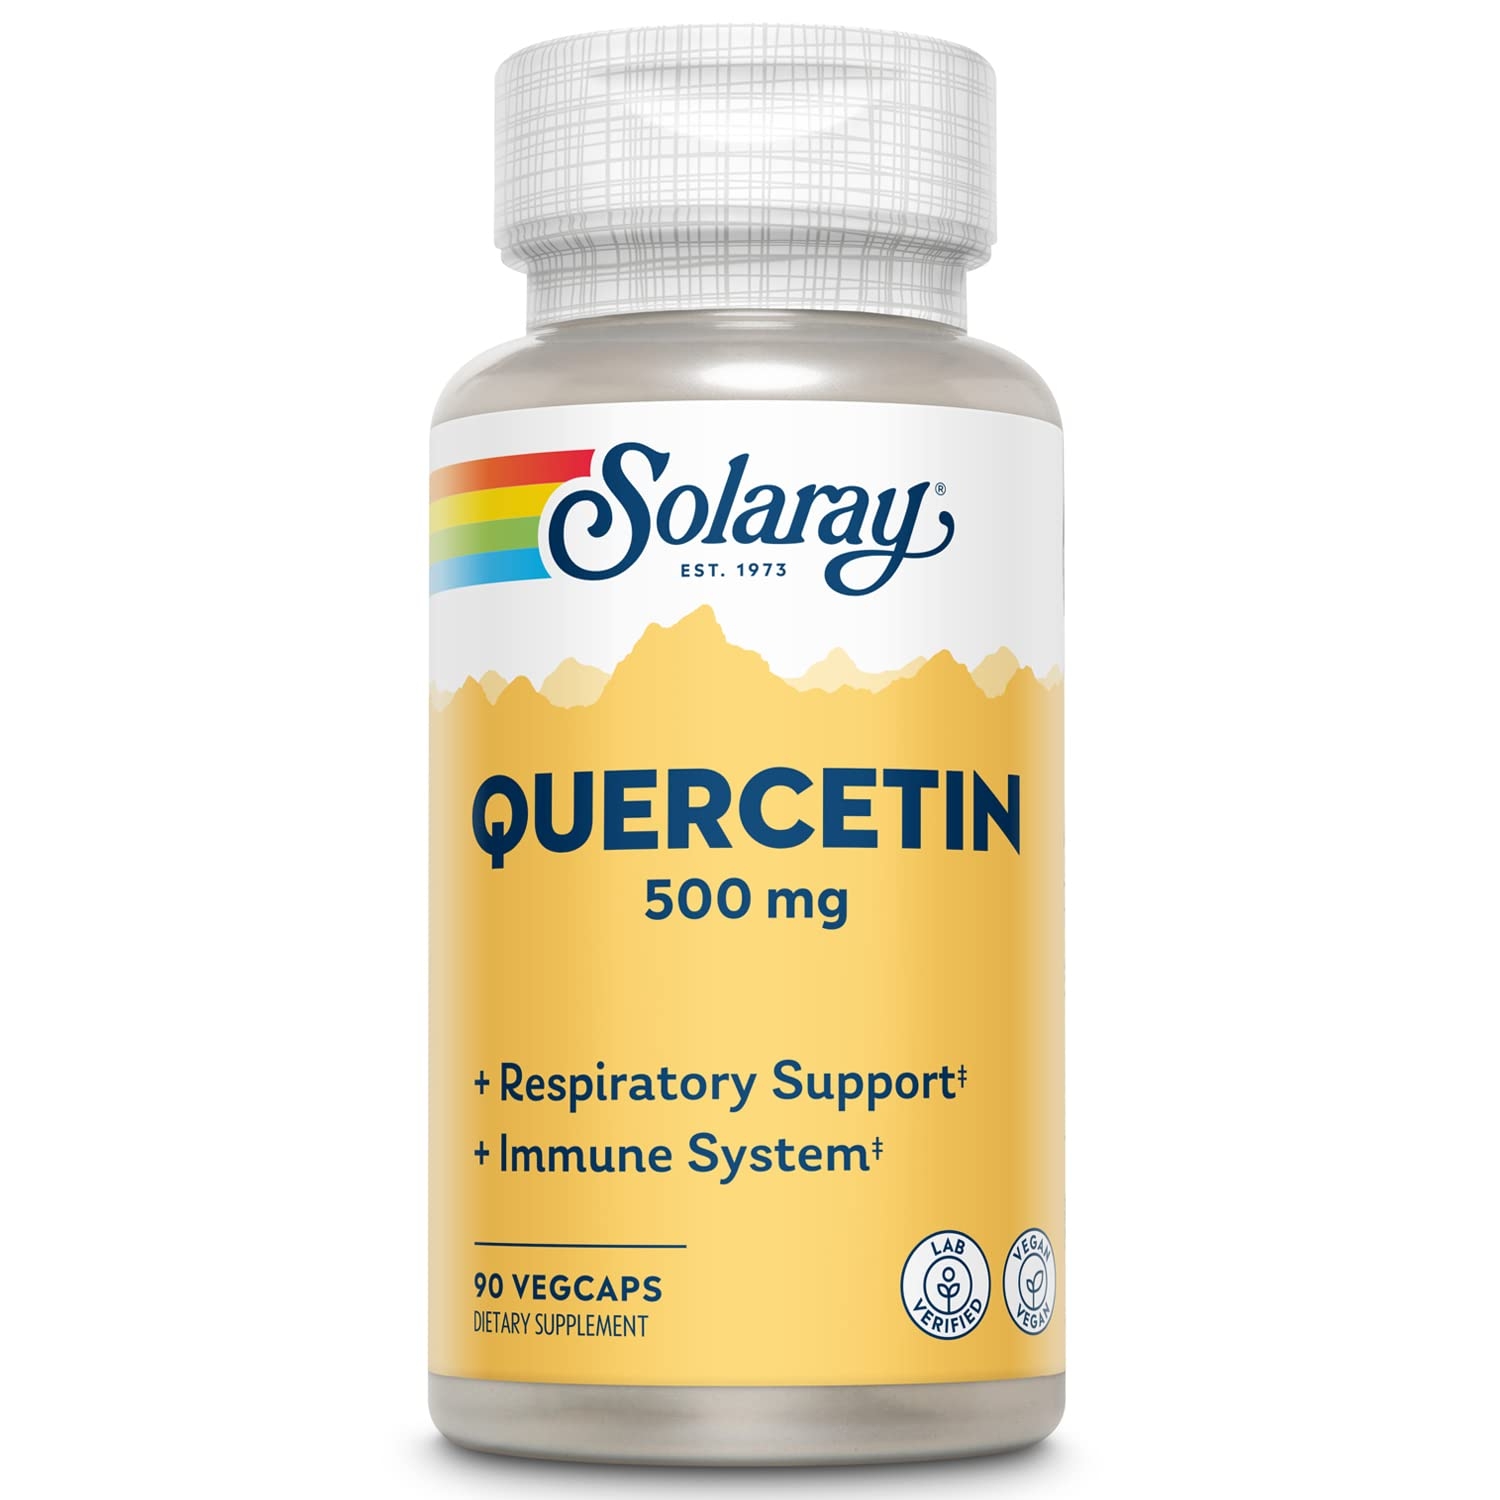 Solaray Quercetin 500mg | Support for Healthy Cells, Heart, Circulatory & Respiratory System | Bioflavonoids, Antioxidants, AMPK Activator | 90 Count